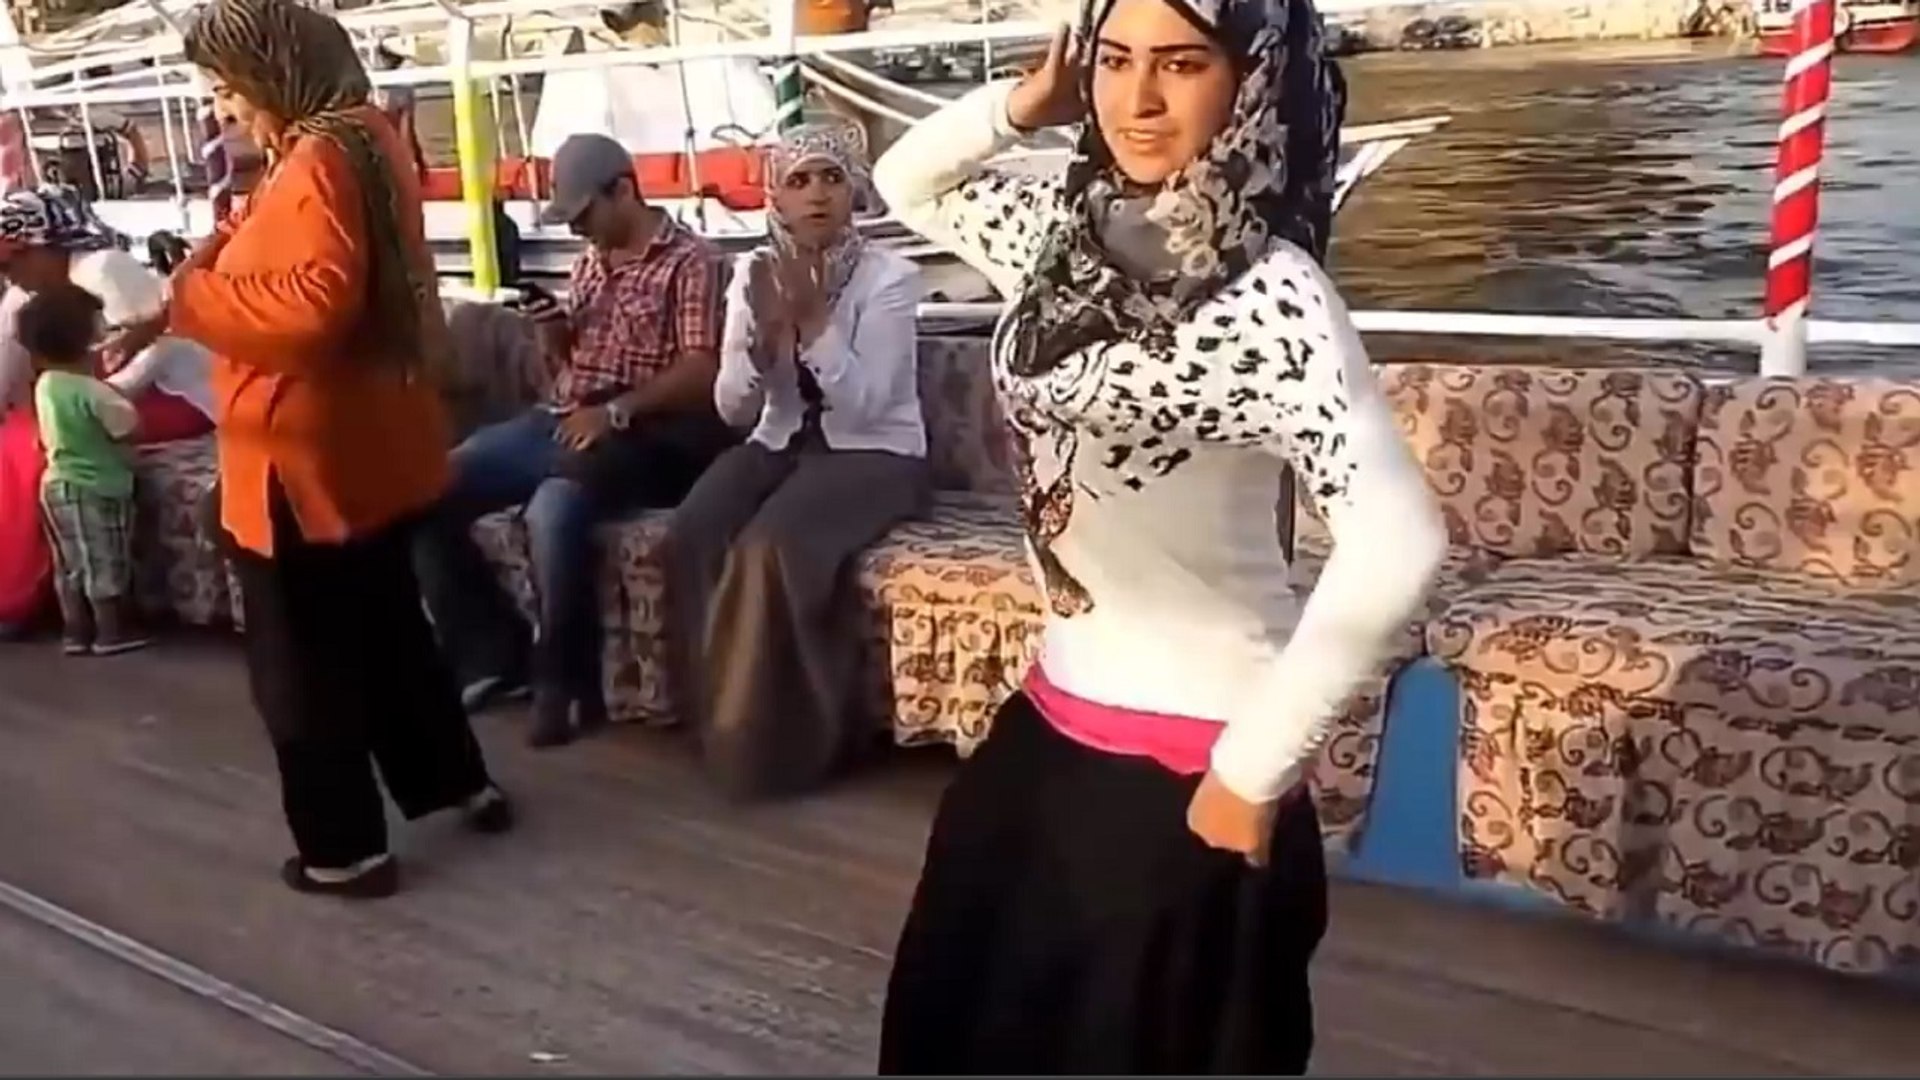 Nil nehrini sallayan Arap kızları - Dailymotion Video